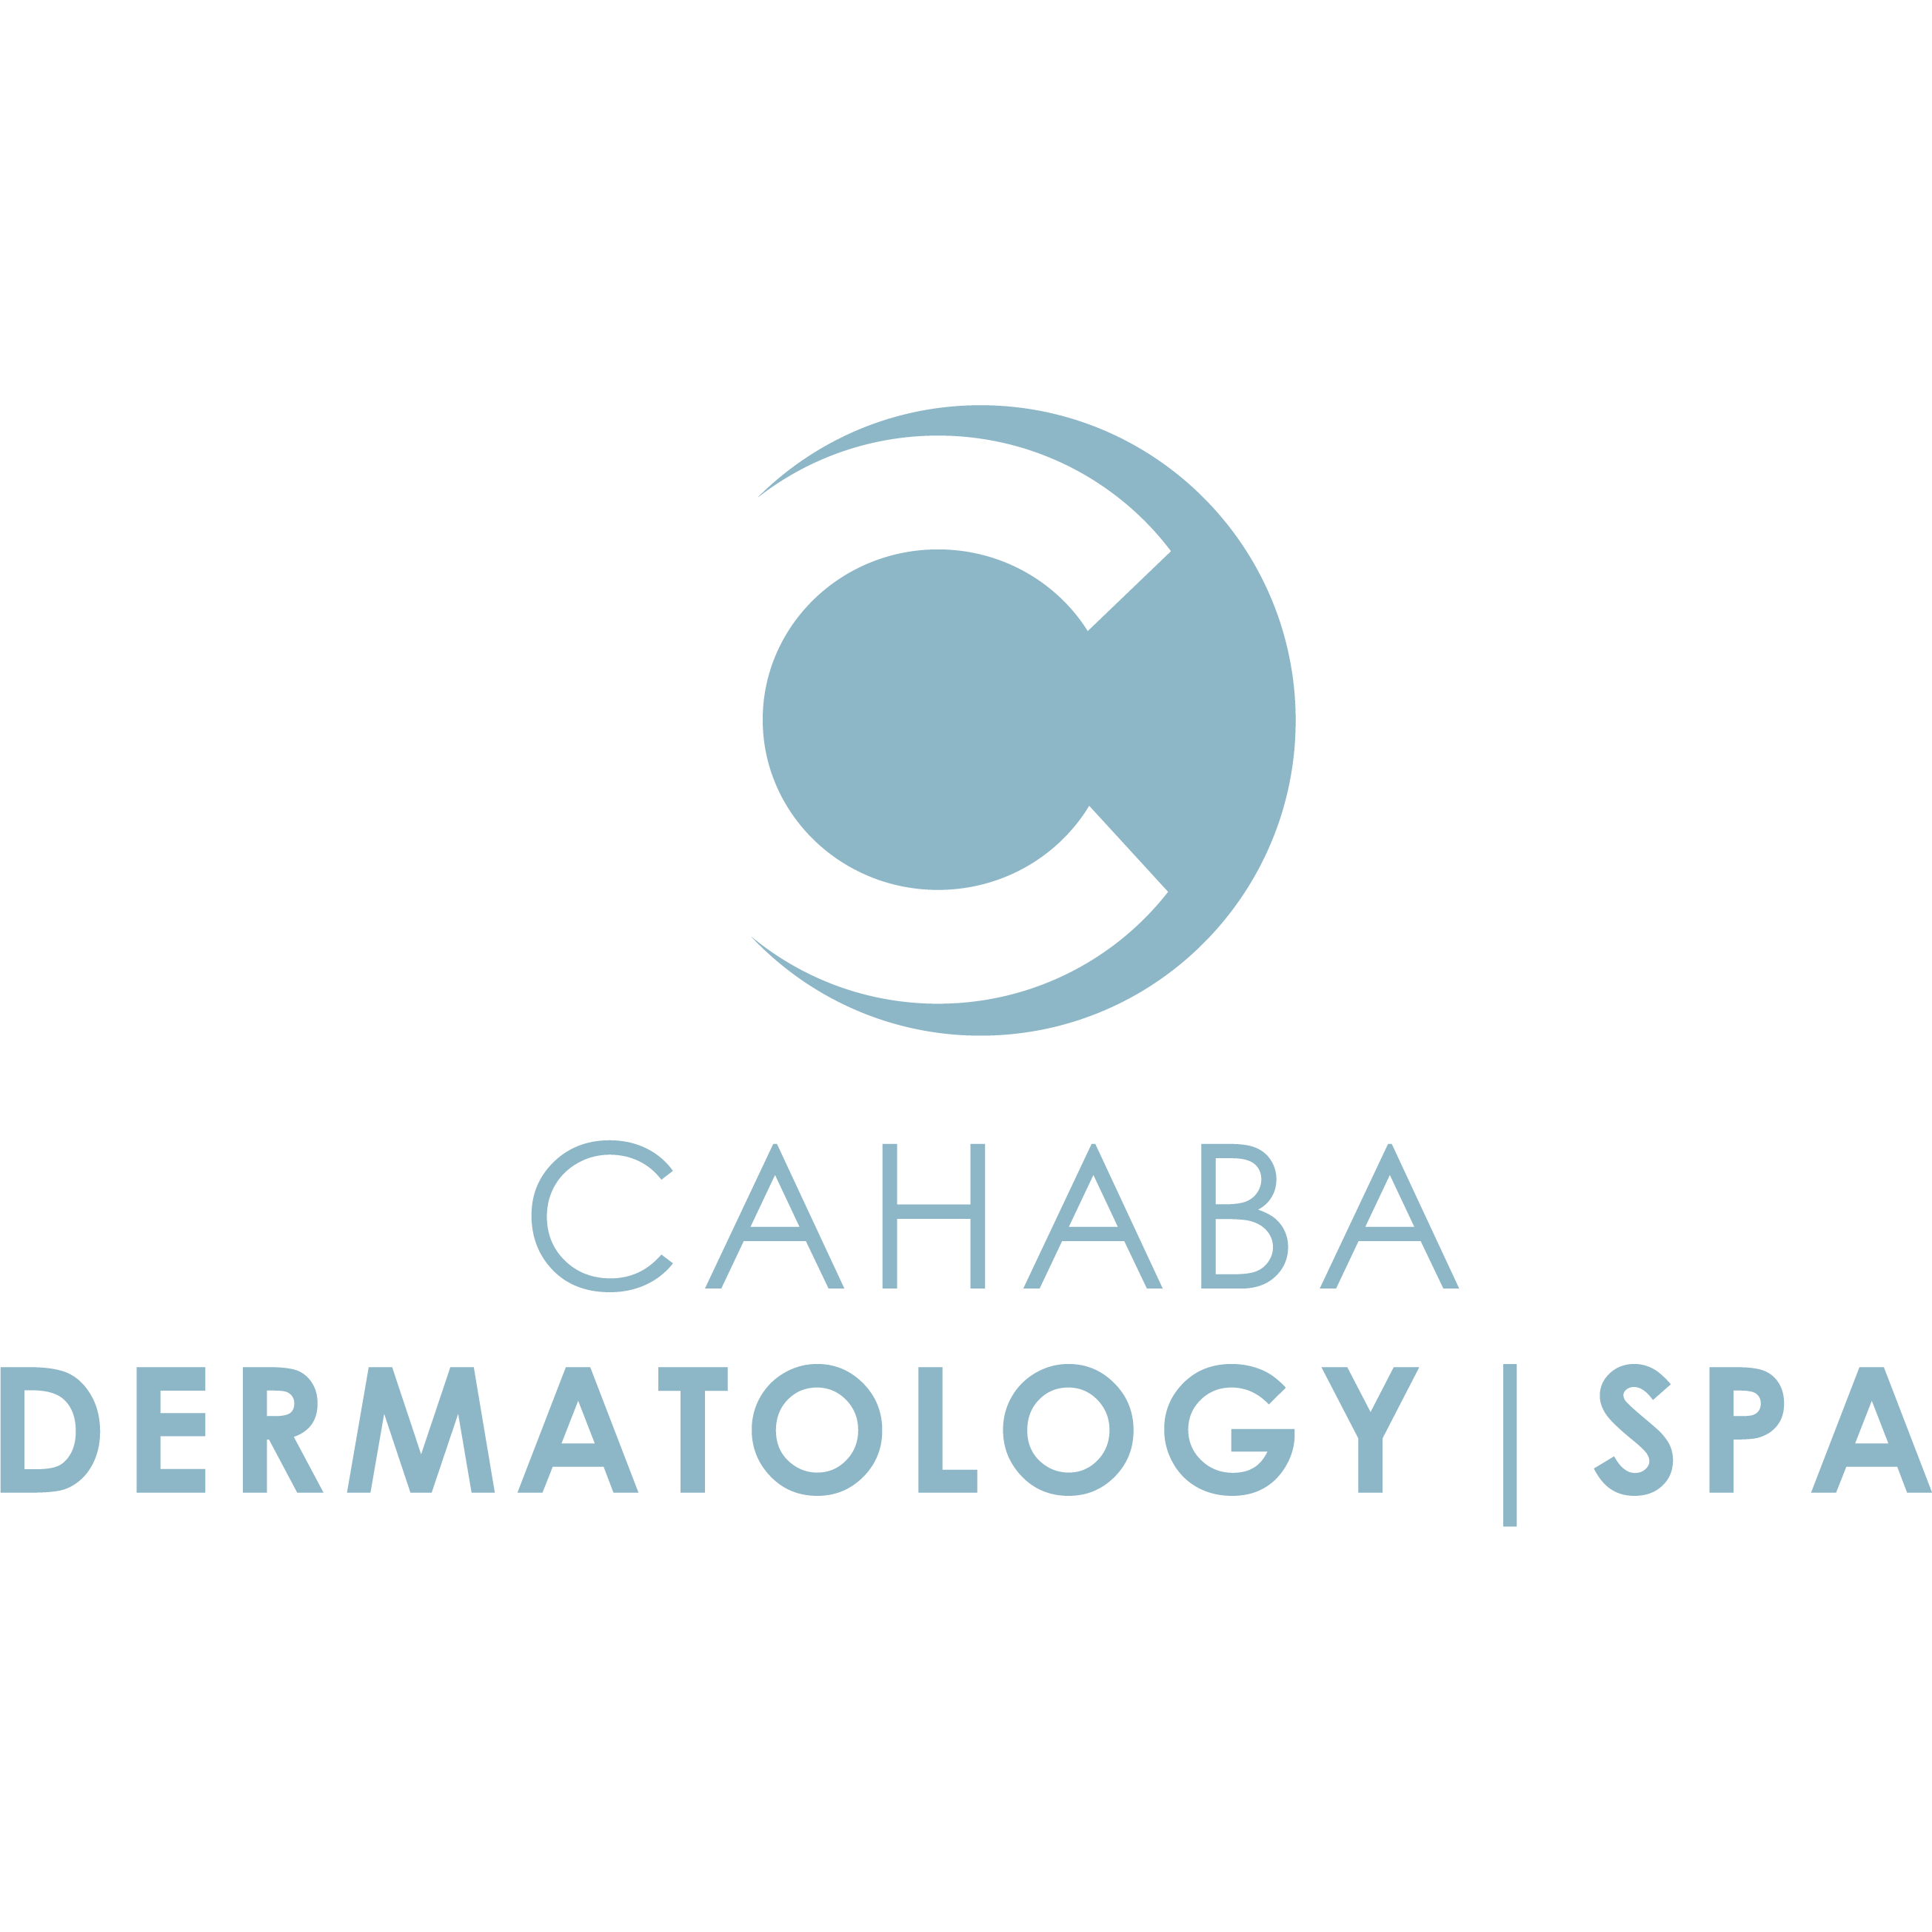 Cahaba Dermatology & Skin Health Center (Tuscaloosa) - Tuscaloosa, AL 35406 - (205)214-7546 | ShowMeLocal.com